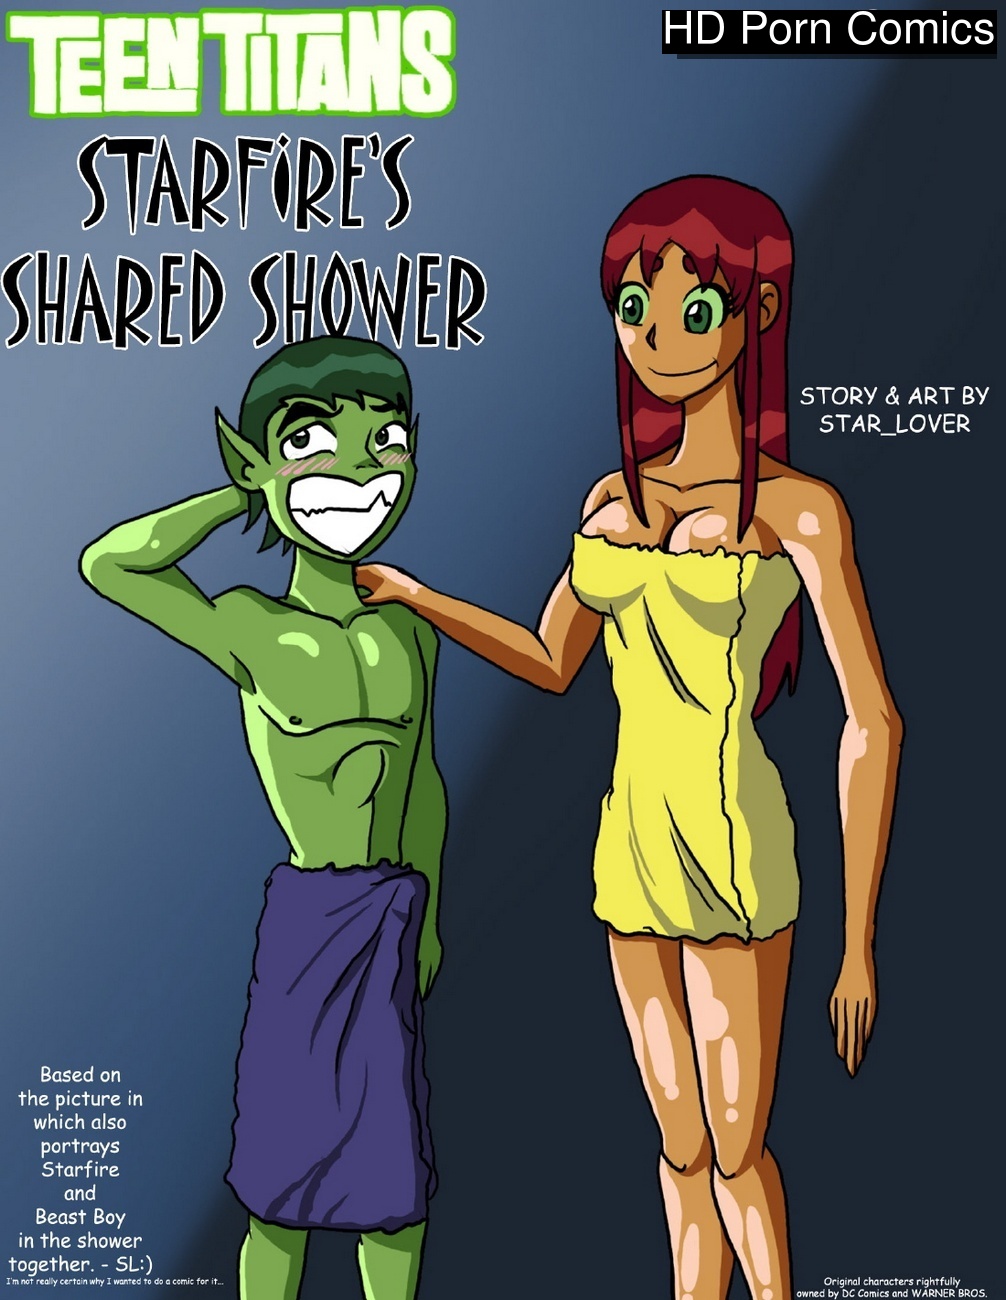 Hot Sexy Starfire Hentai - Starfire's Shared Shower Sex Comic - HD Porn Comics